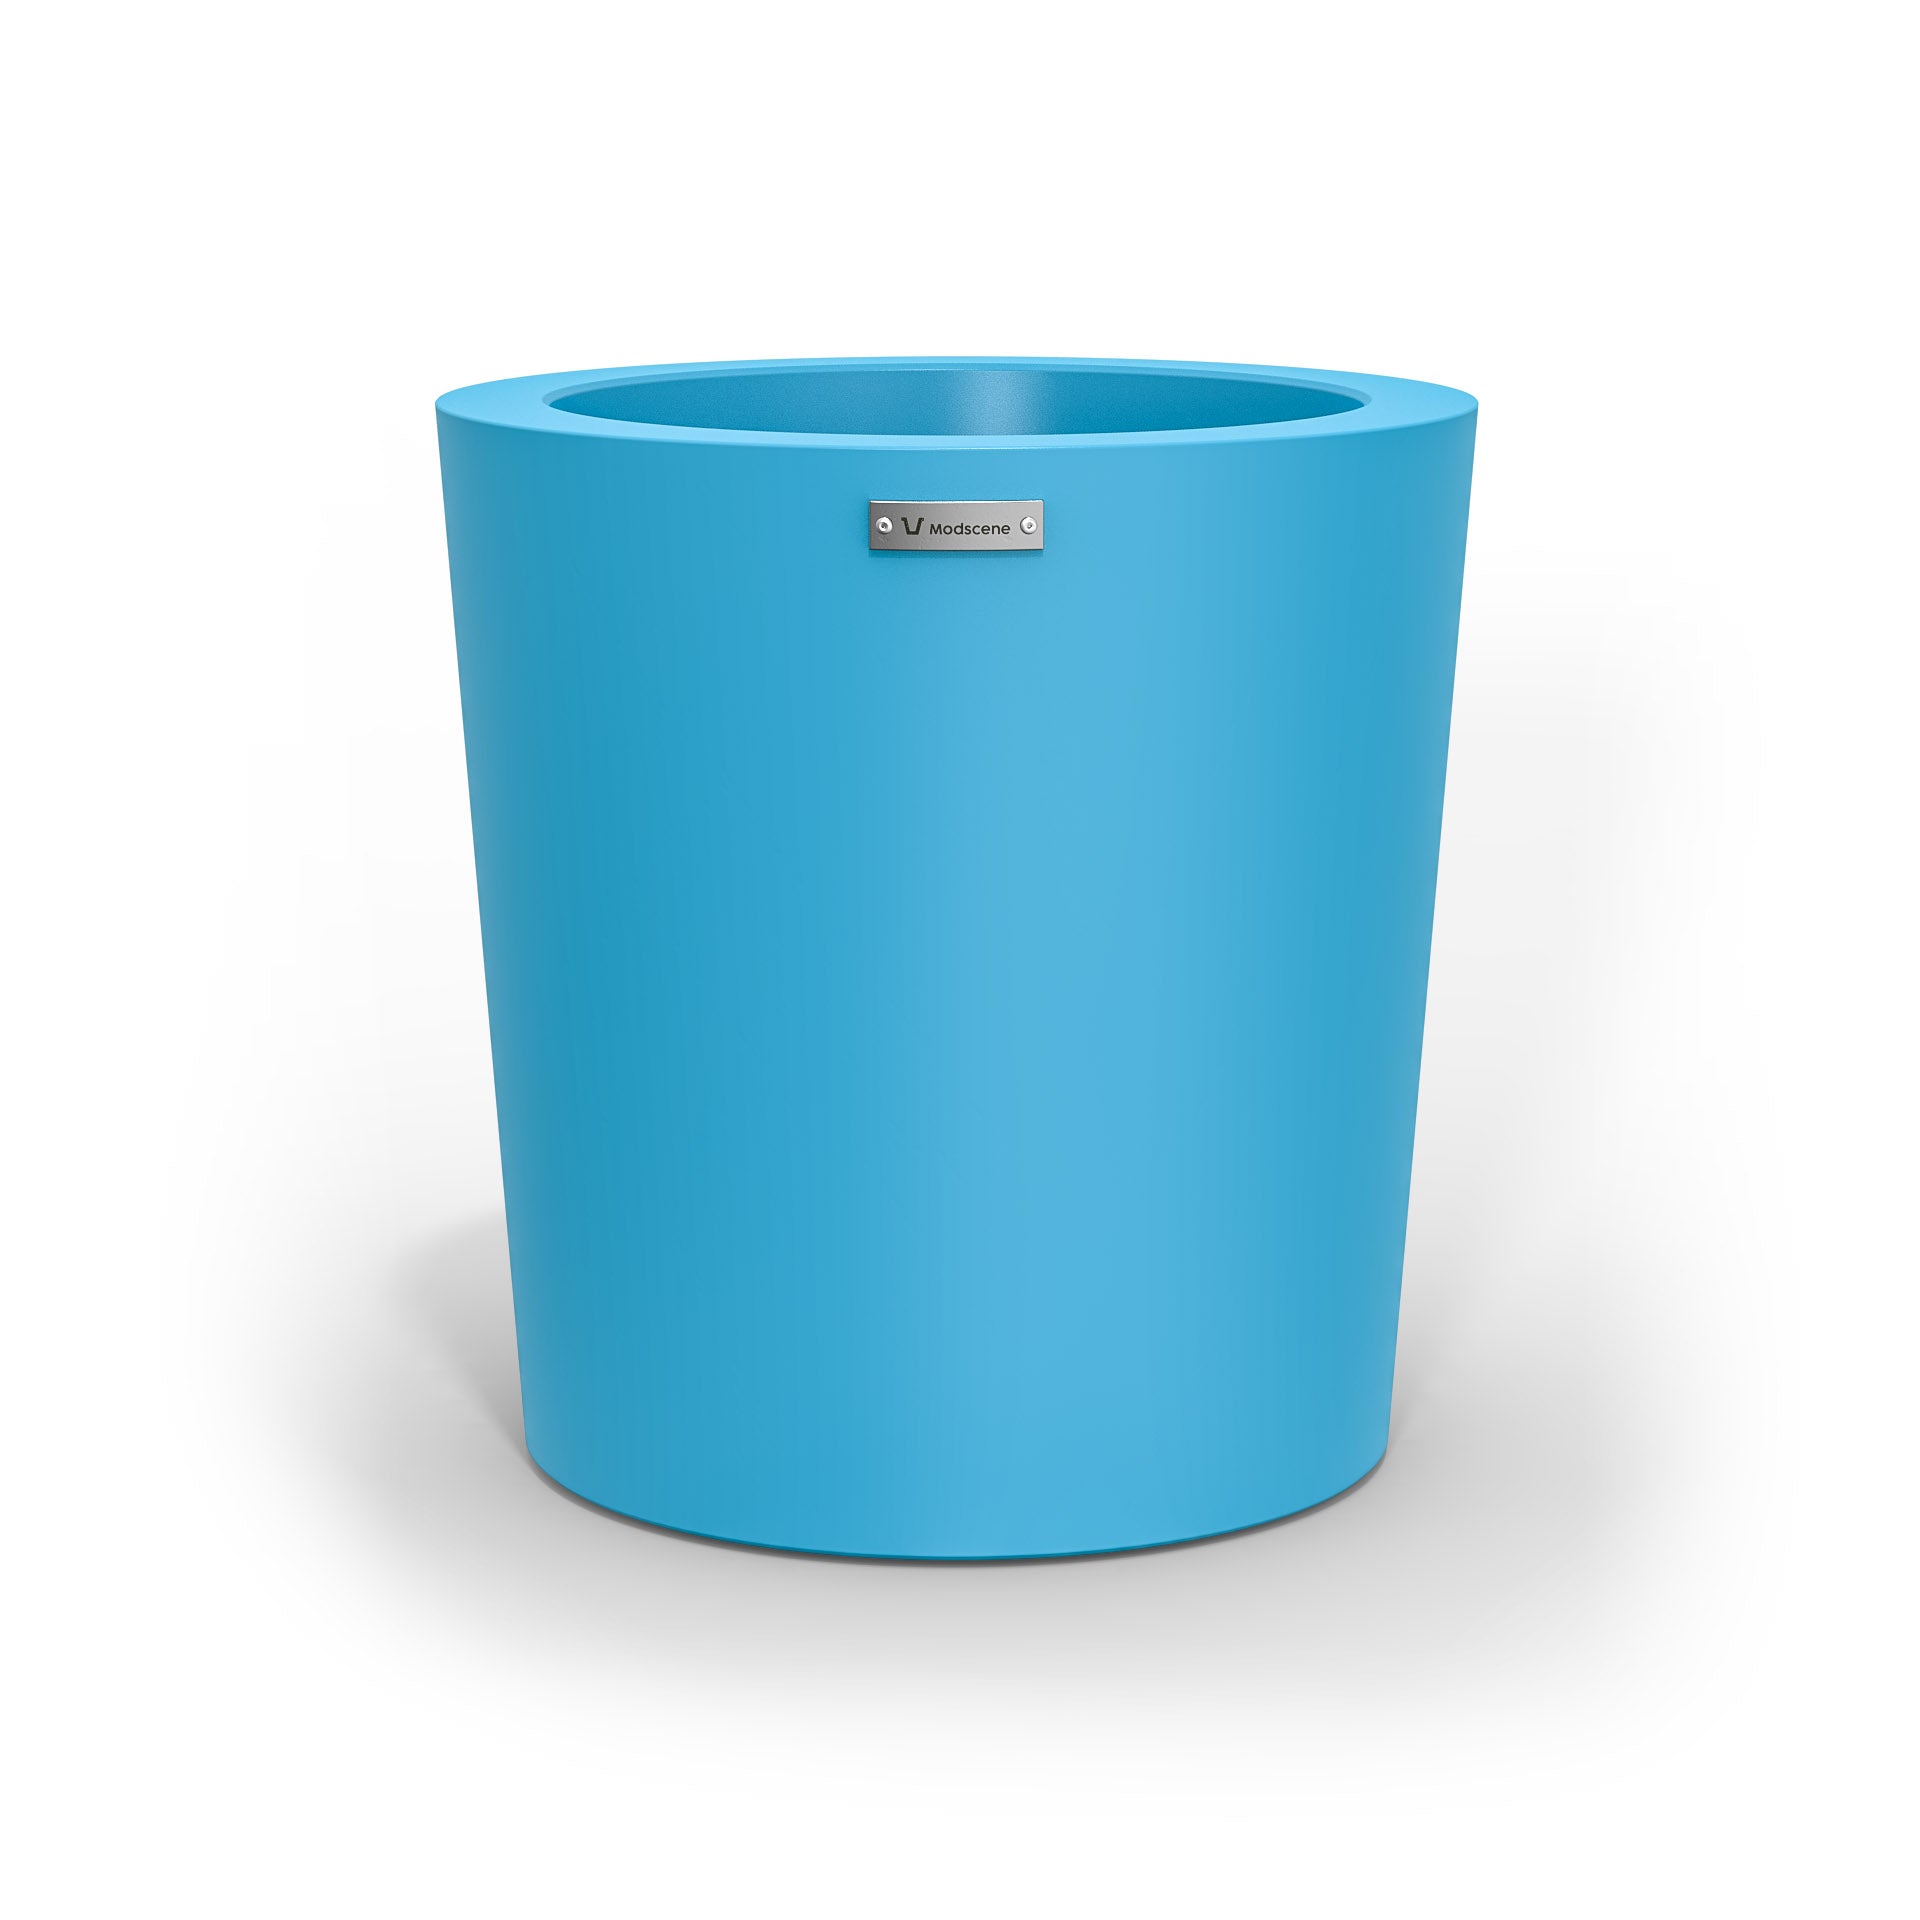 A modern designer planter pot in a light blue colour. 